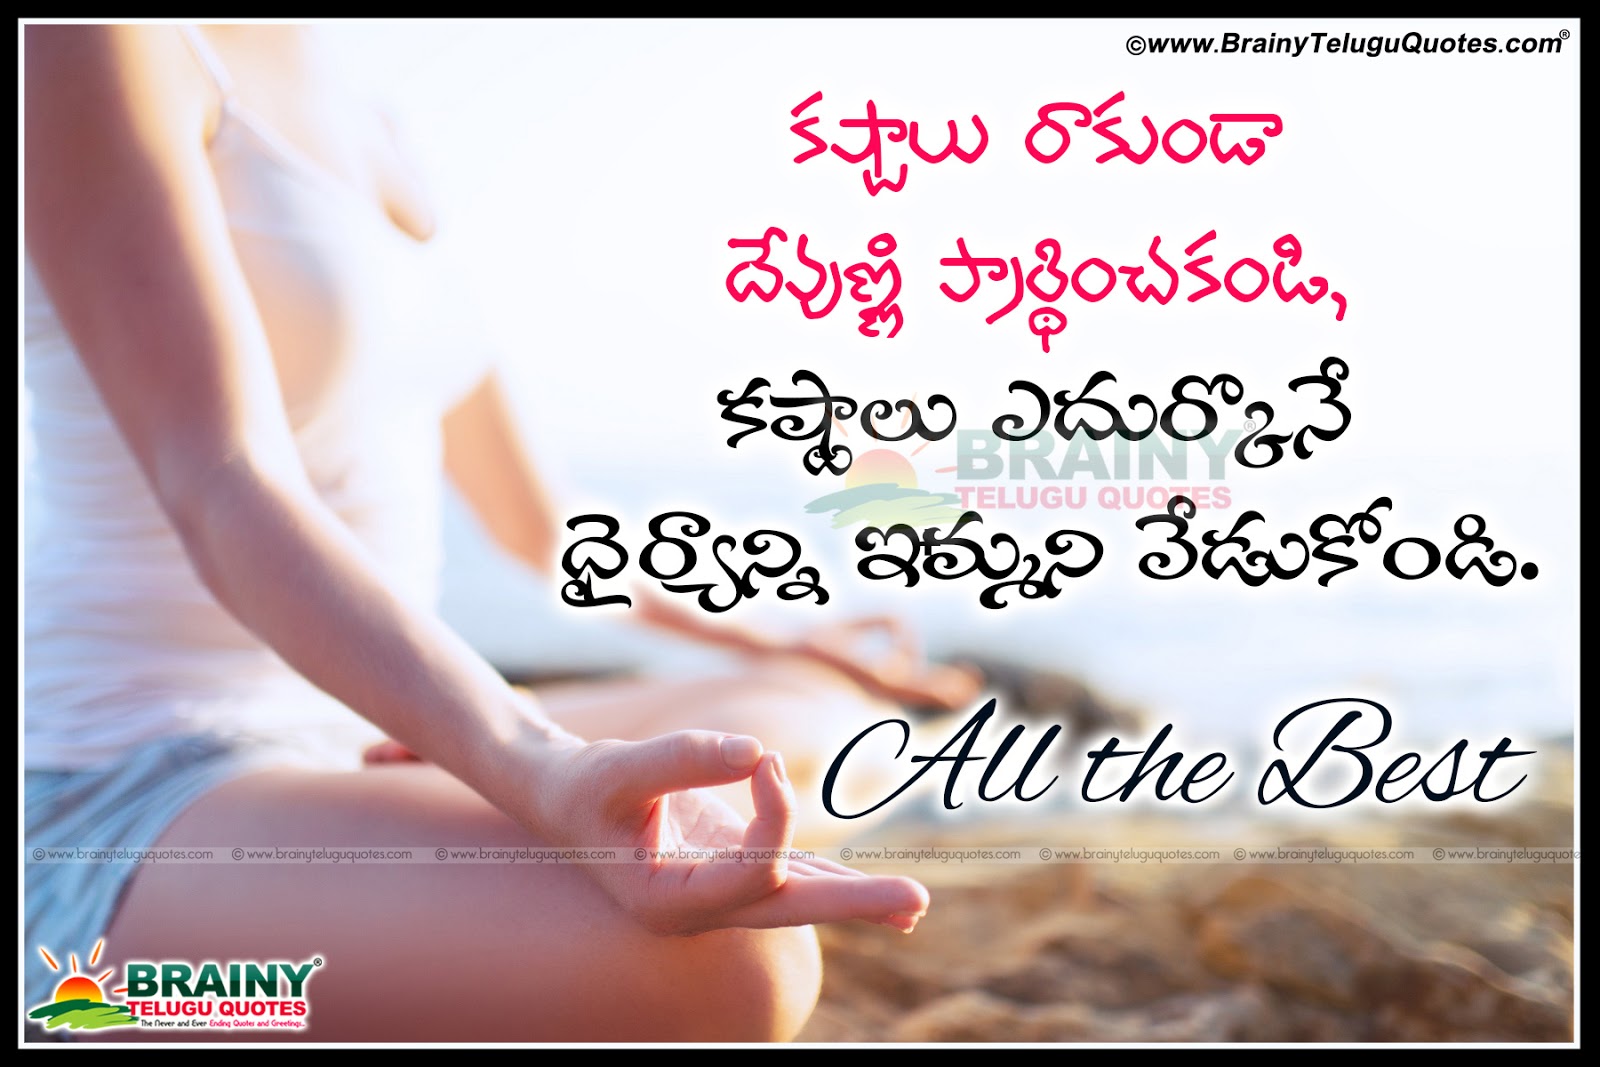 Beautiful Telugu All the best Inspirational Life Quotes with images Best Telugu inspirational All the